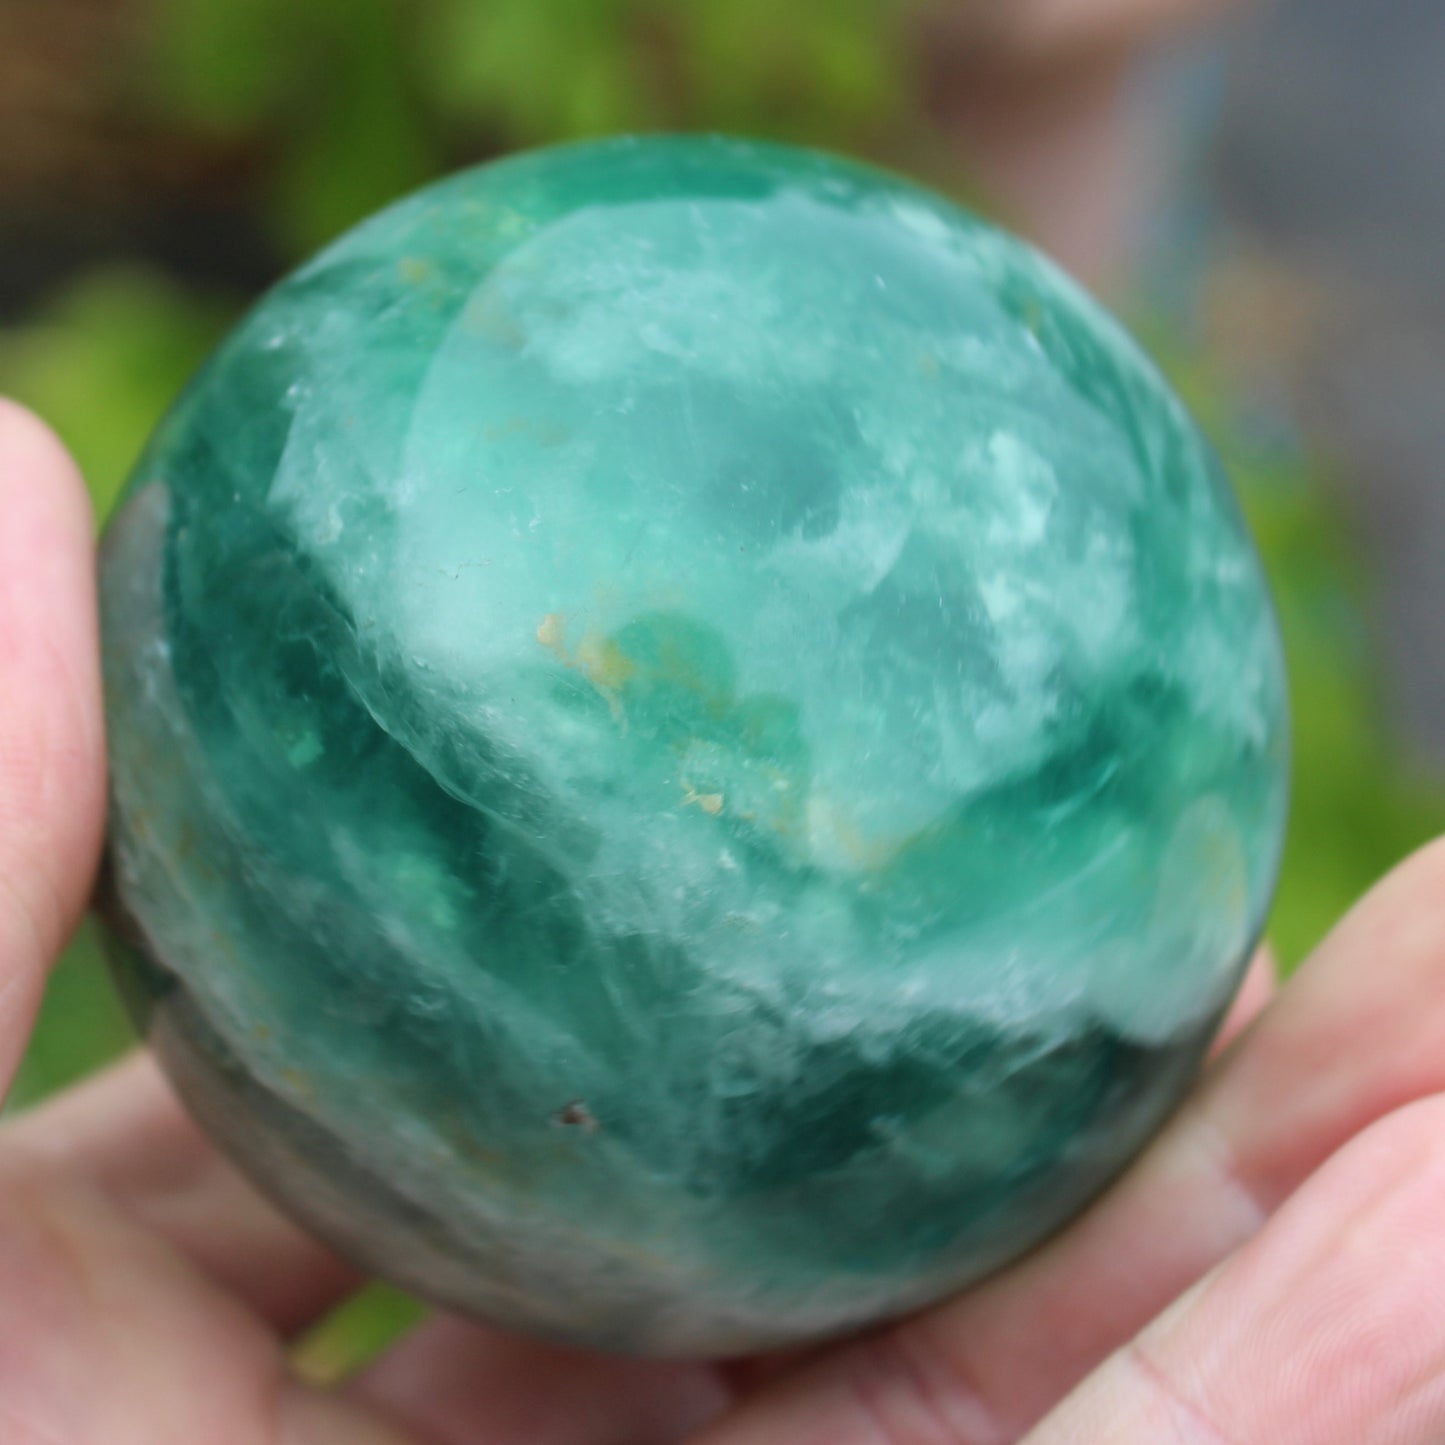 Green Fluorite sphere 606g